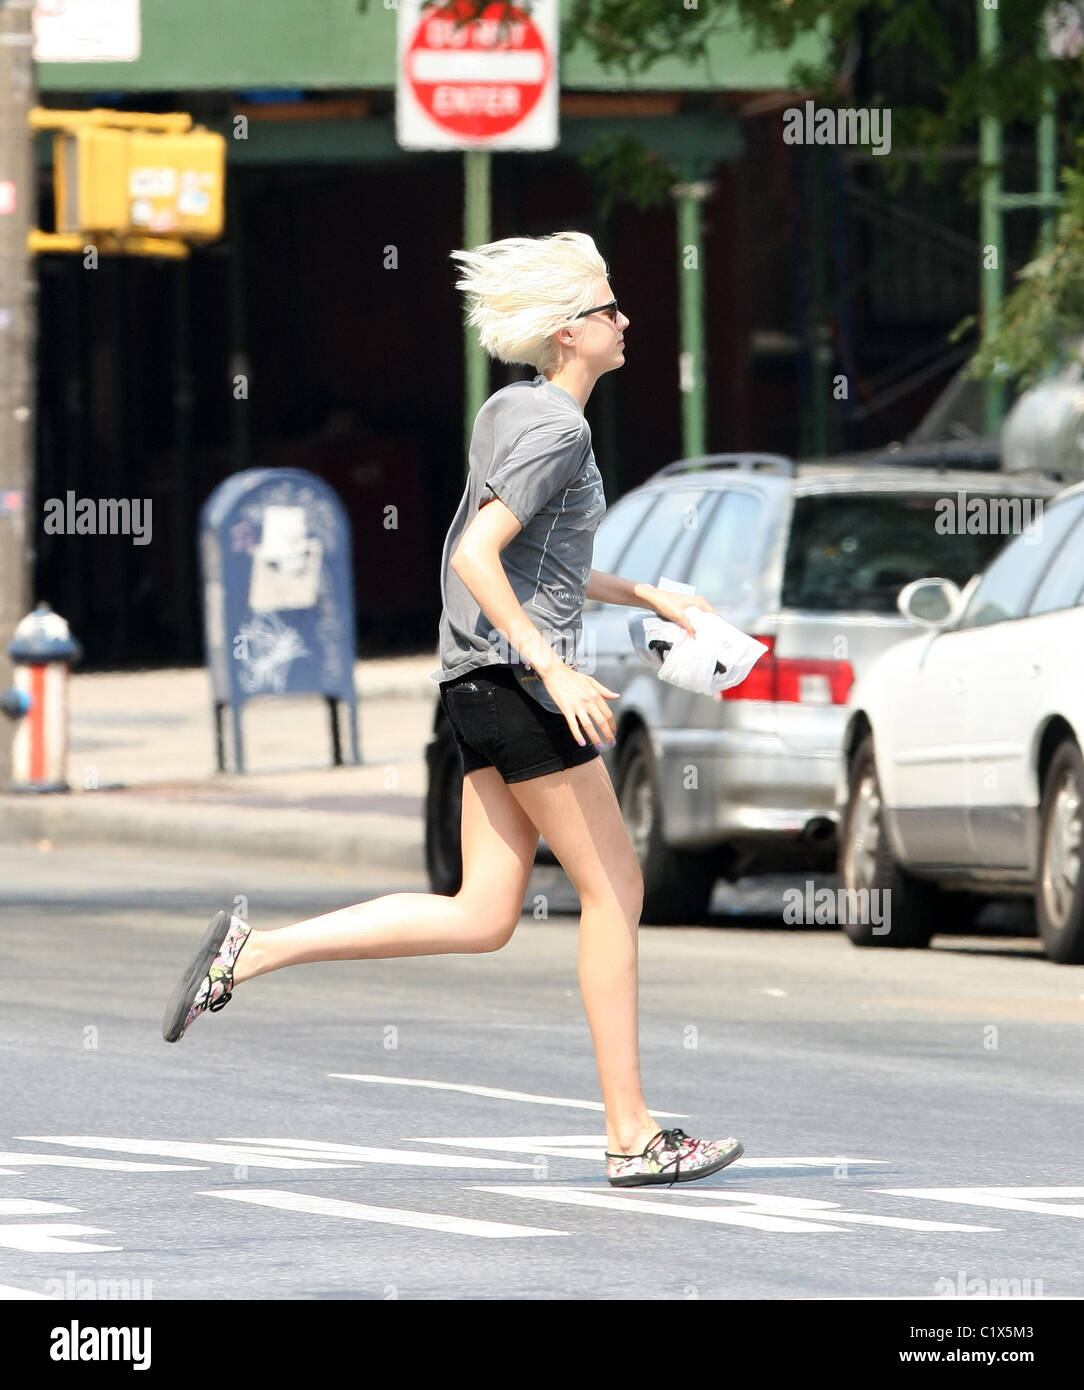 Agyness Dean running across the street in SoHo New York City, USA - 18.08.09 Stock Photo